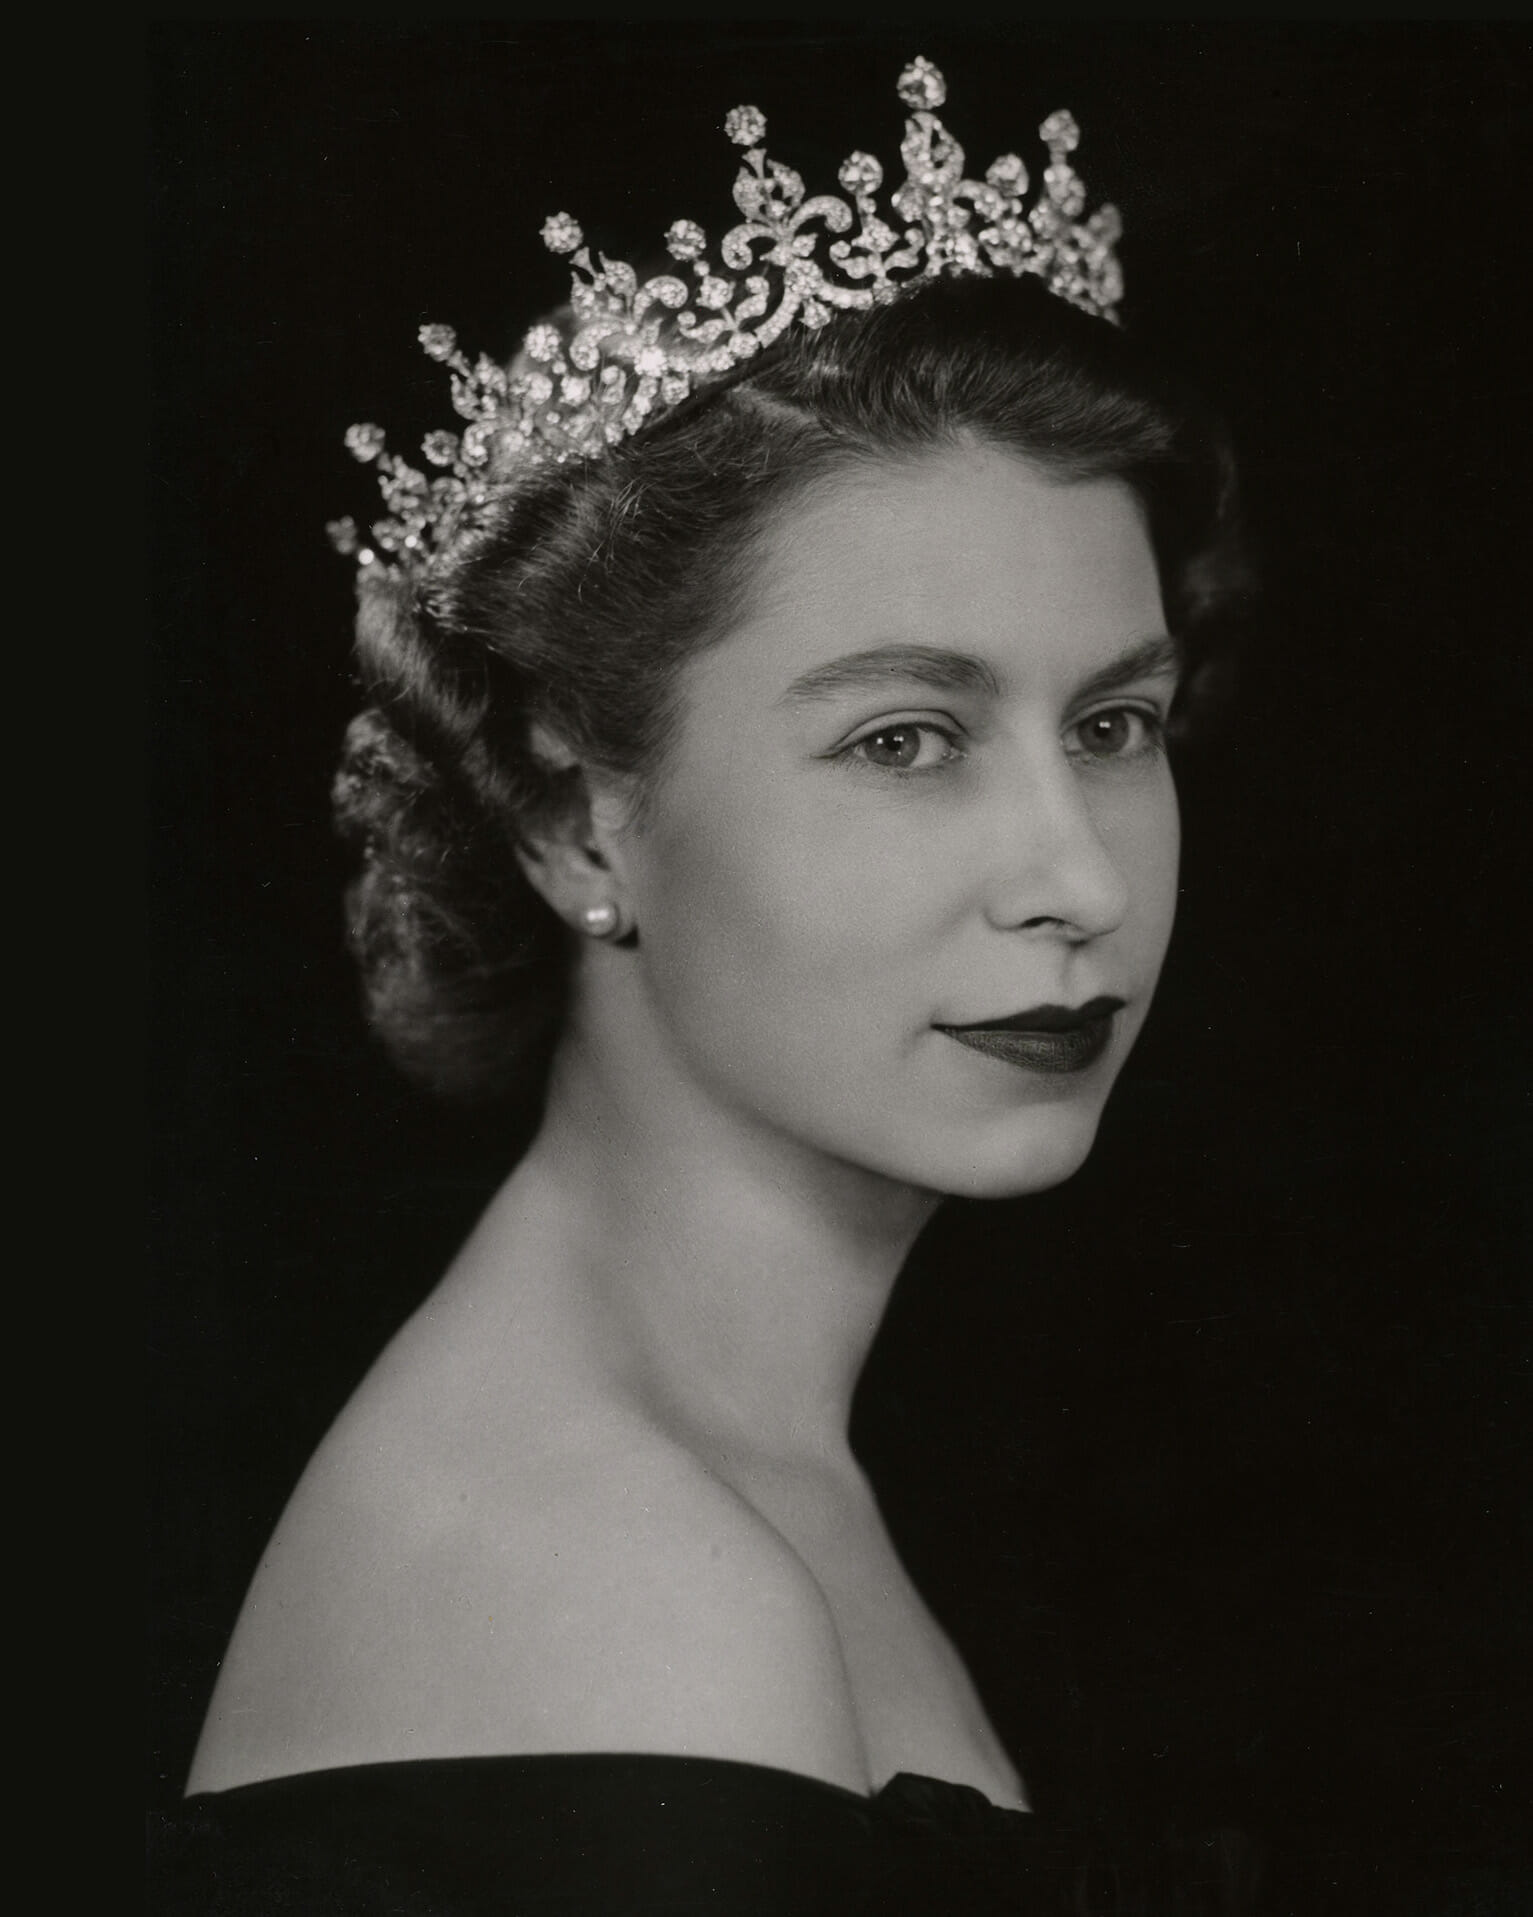 Queen Elizabeth II first official portrait as monarch.